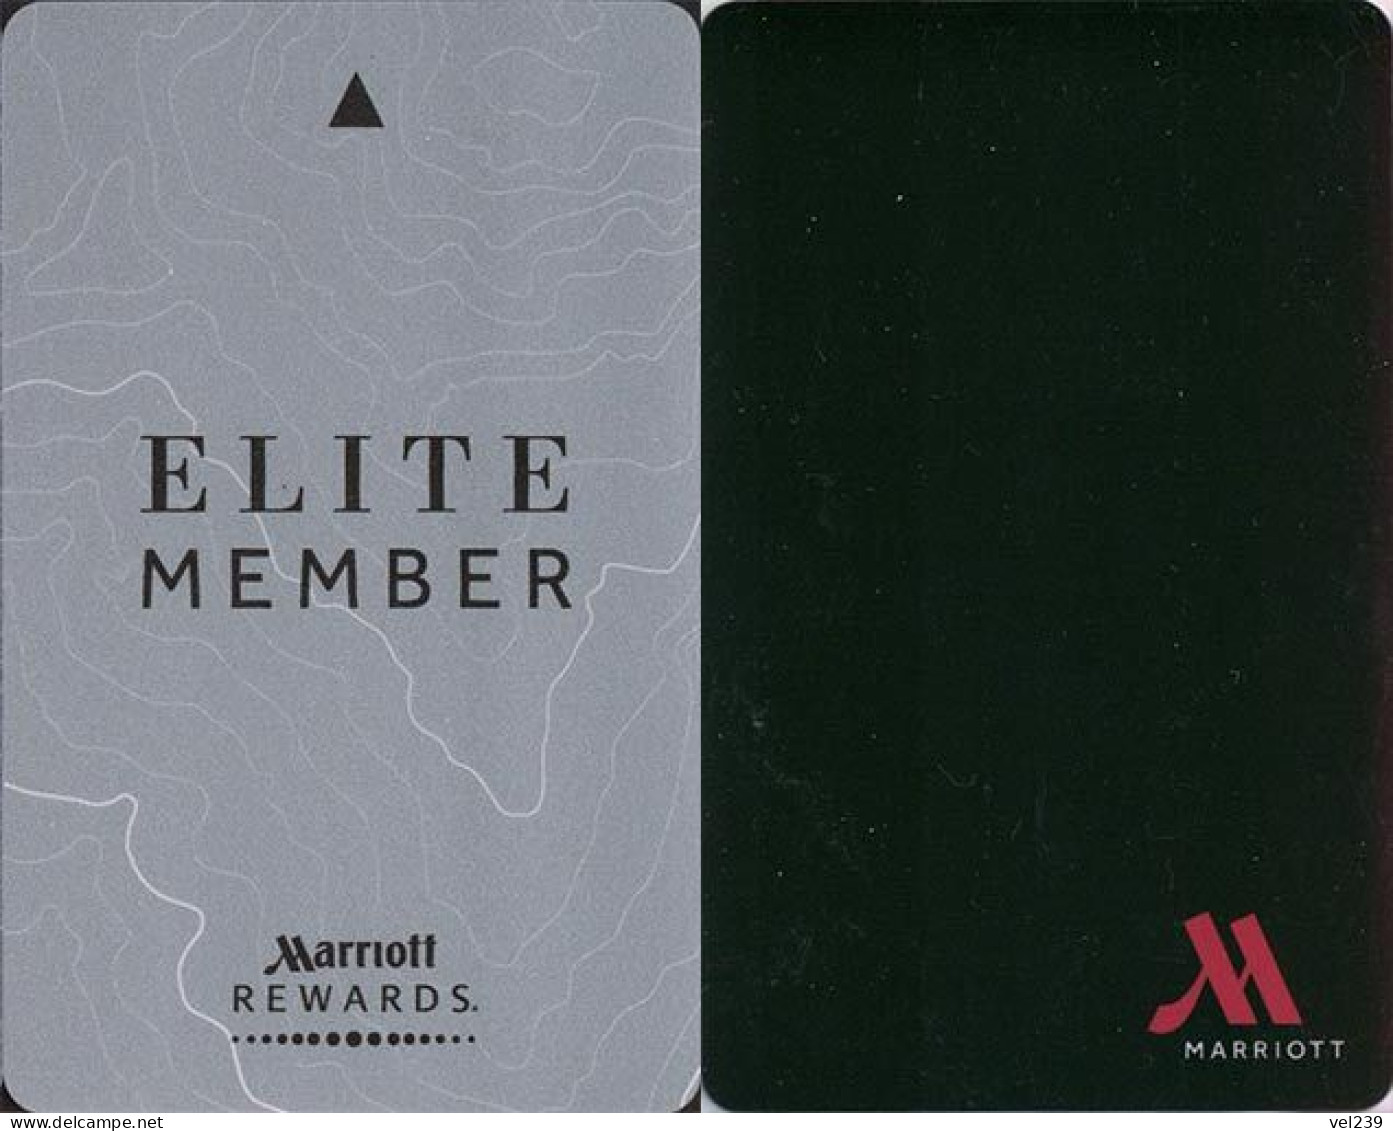 Marriott Rewards. Elite Member - Cartes D'hotel